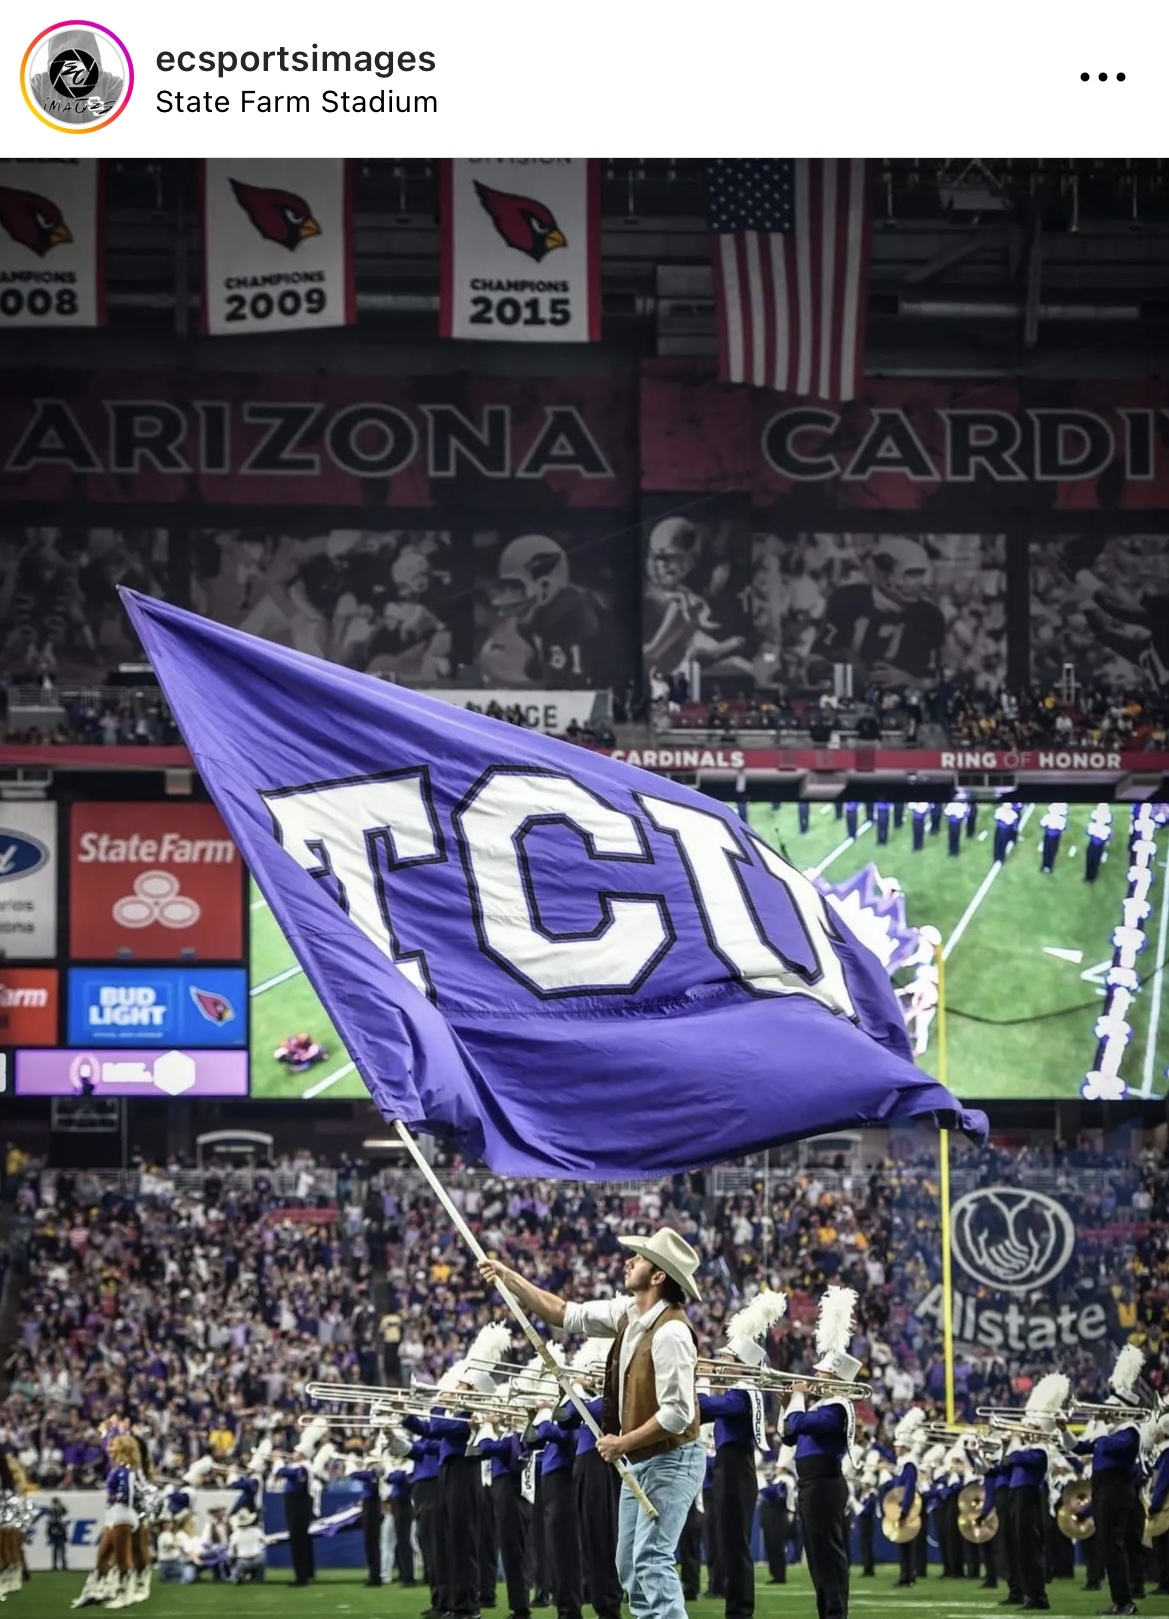 Waving the TCU Battle Flag